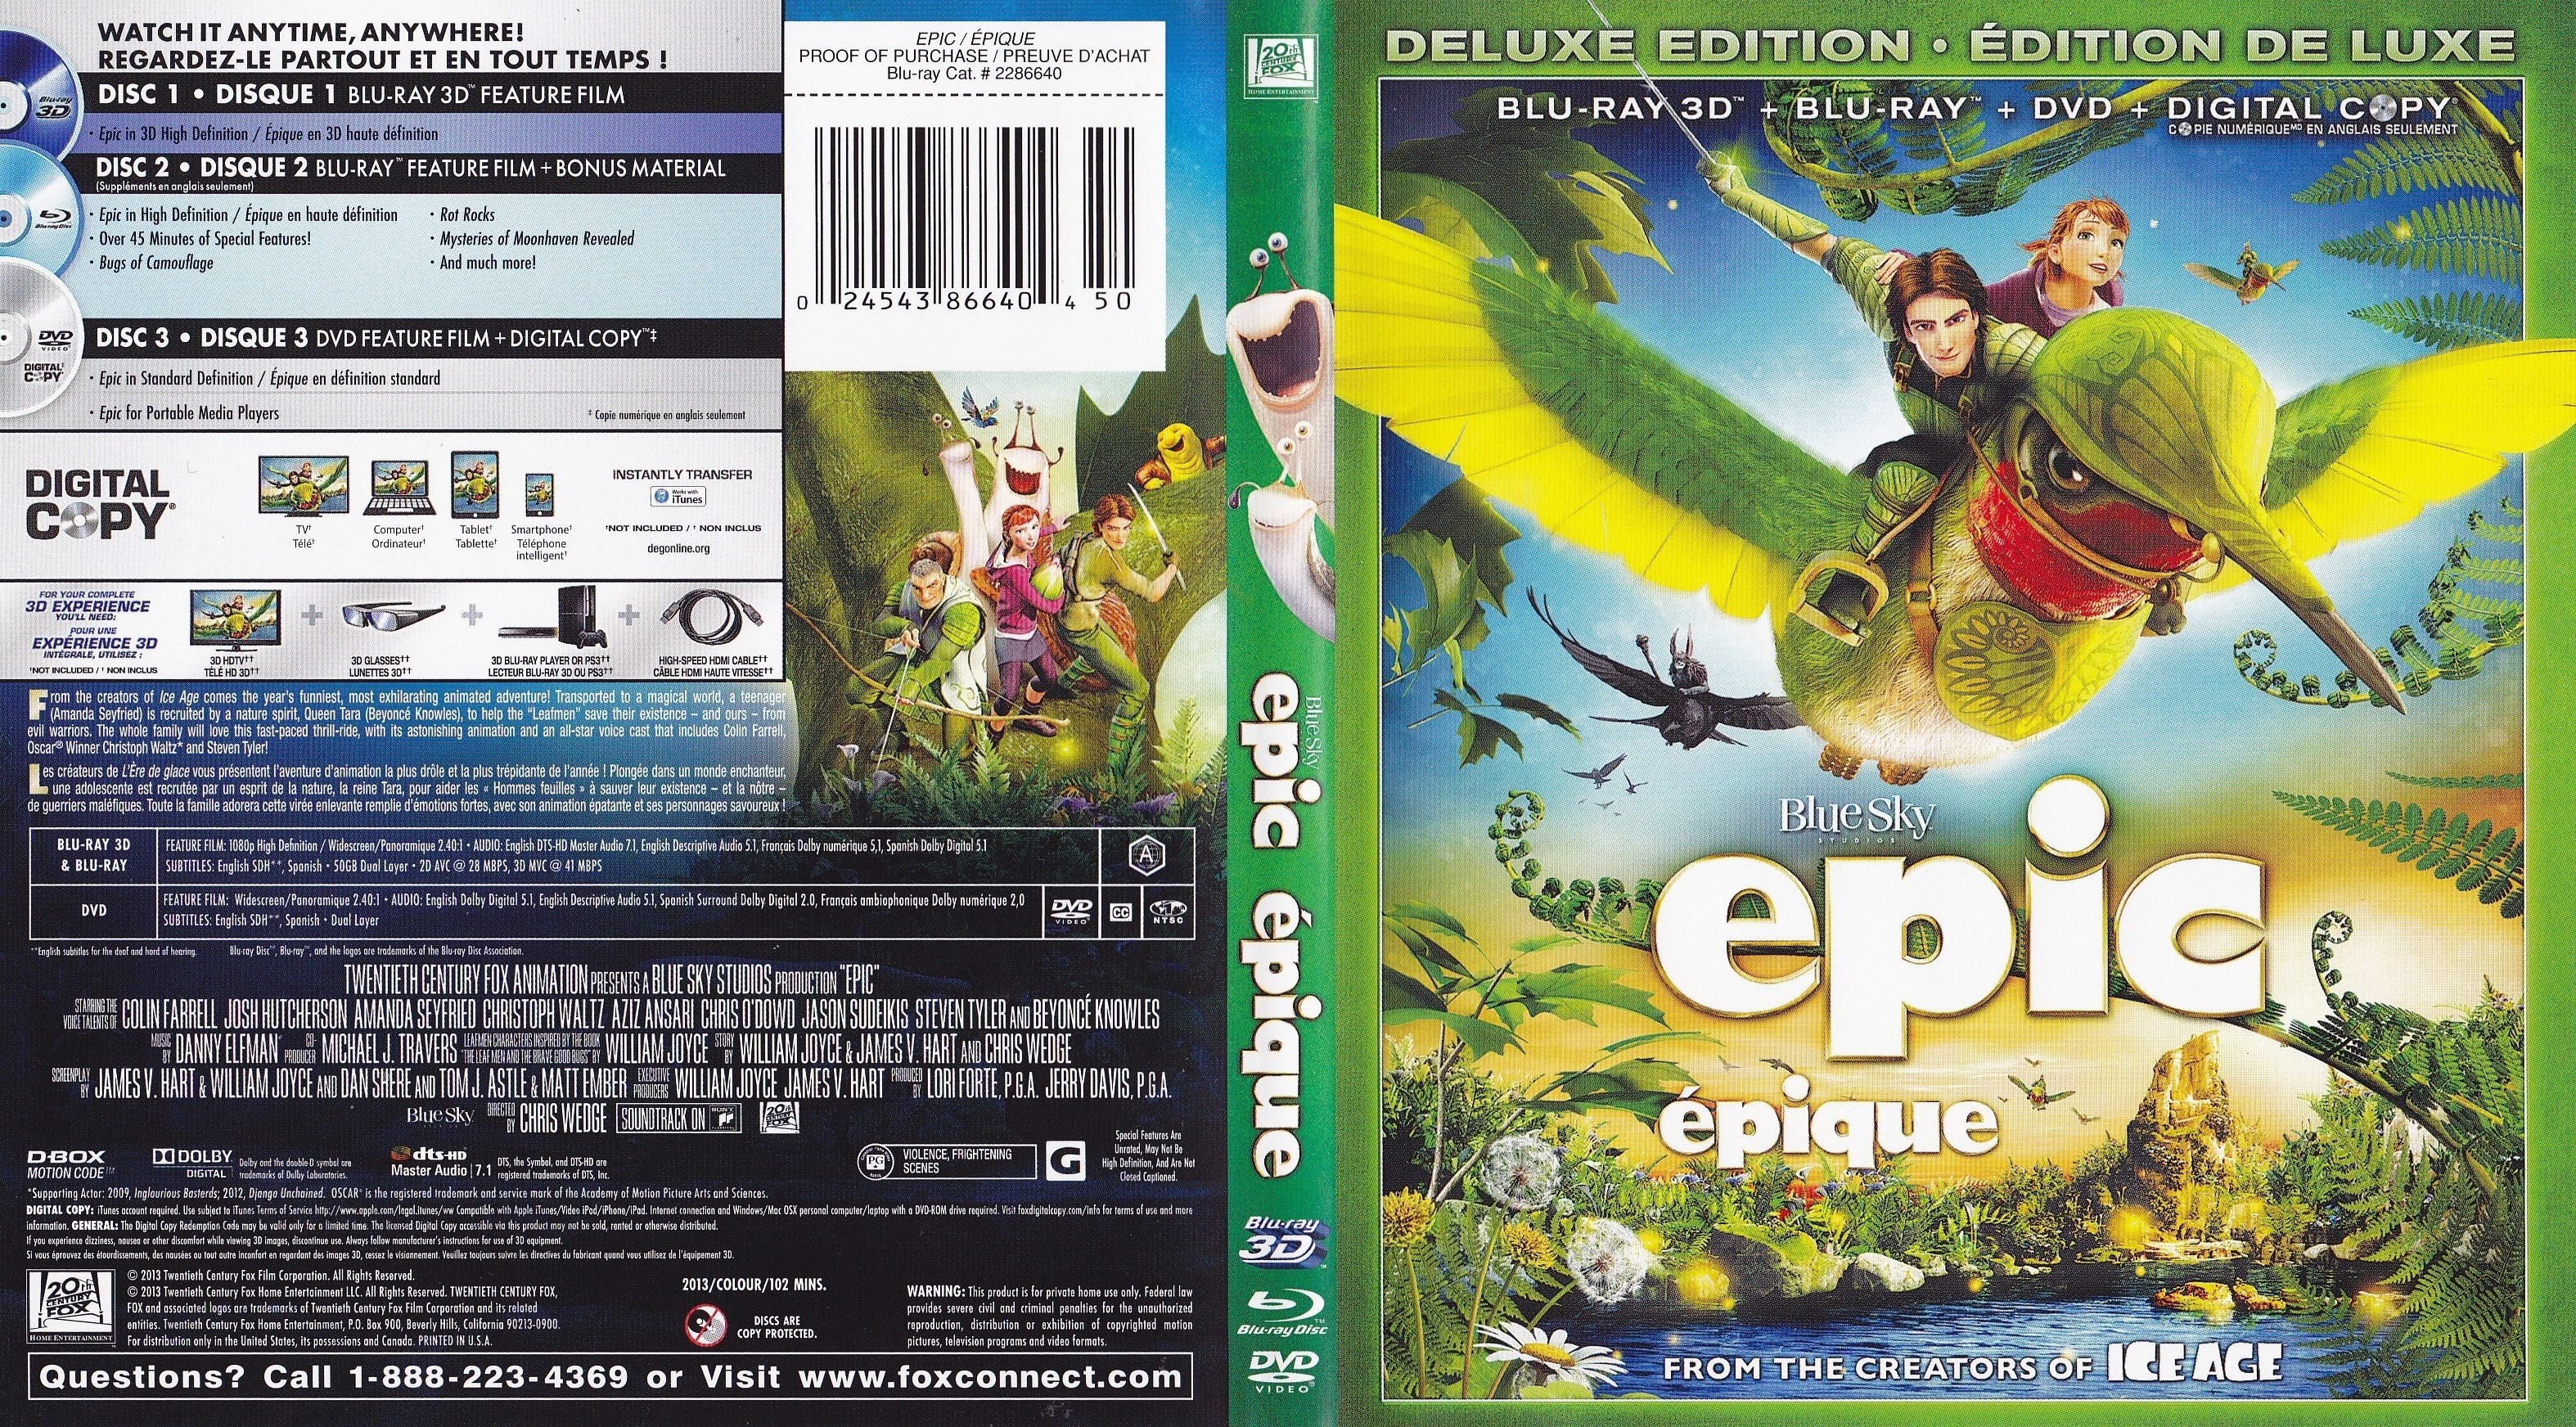 Jaquette DVD Epique - Epic (Ccanadienne) (BLU-RAY)